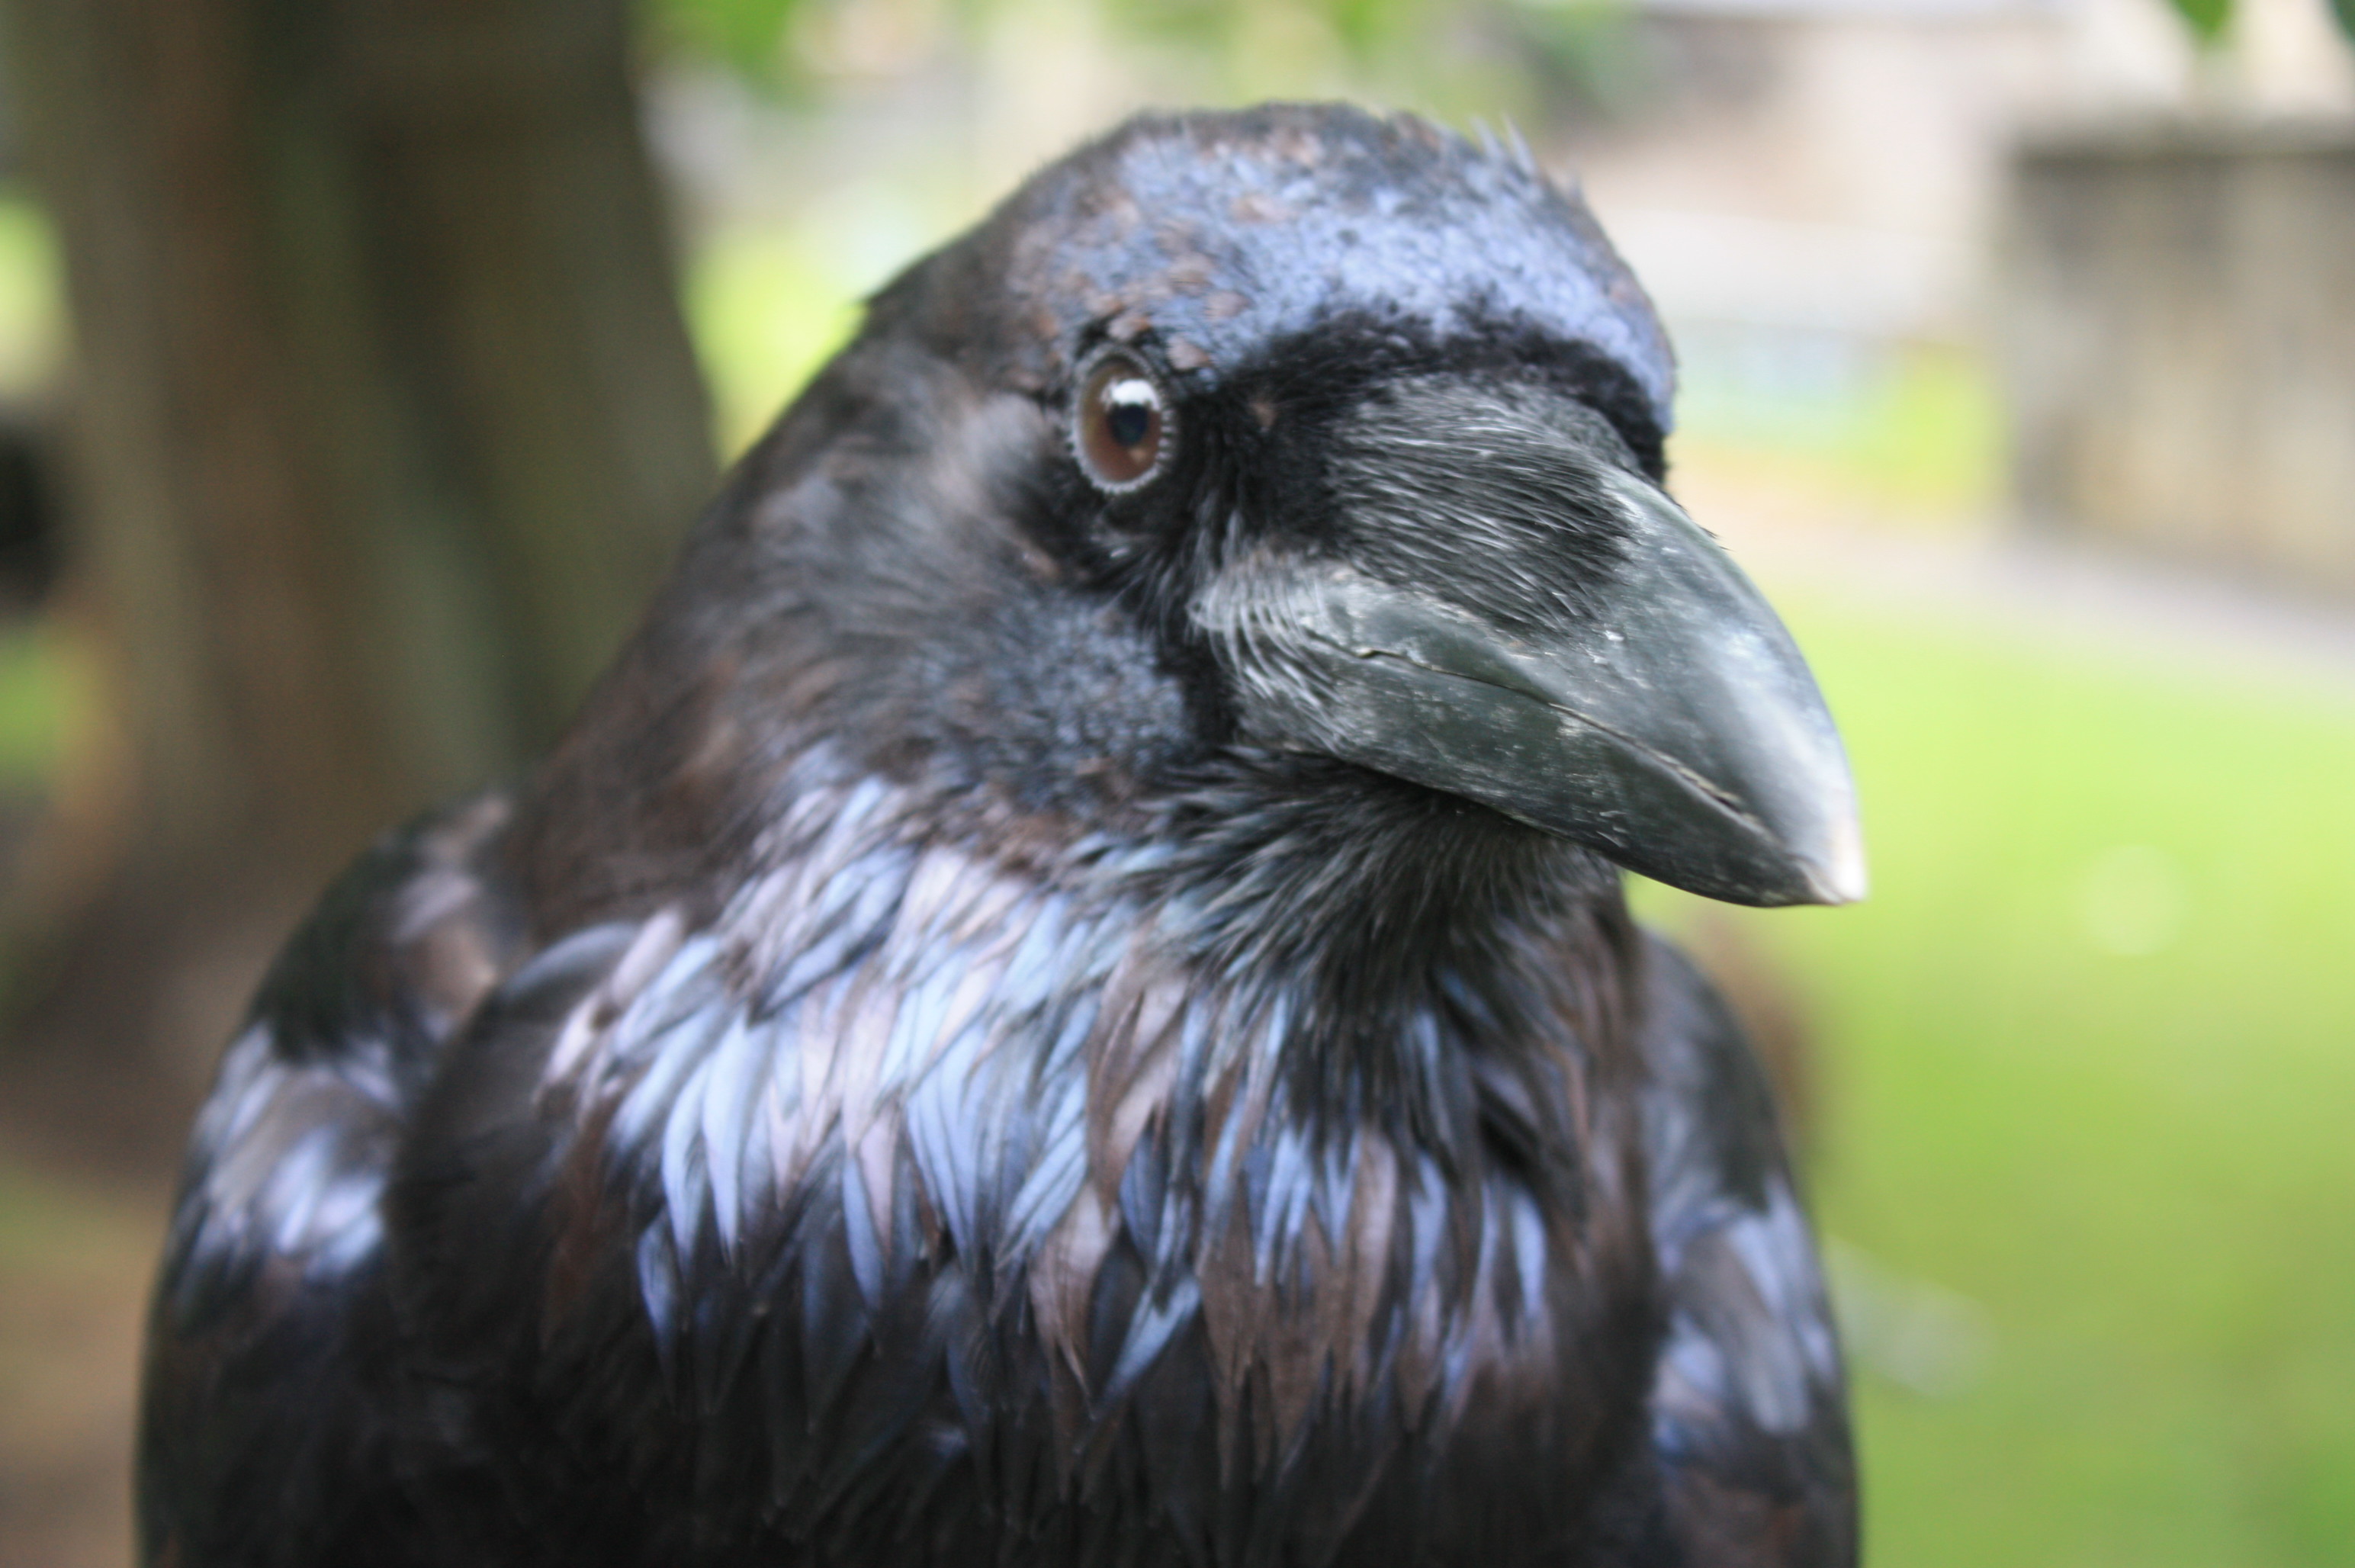 Raven - Wikipedia